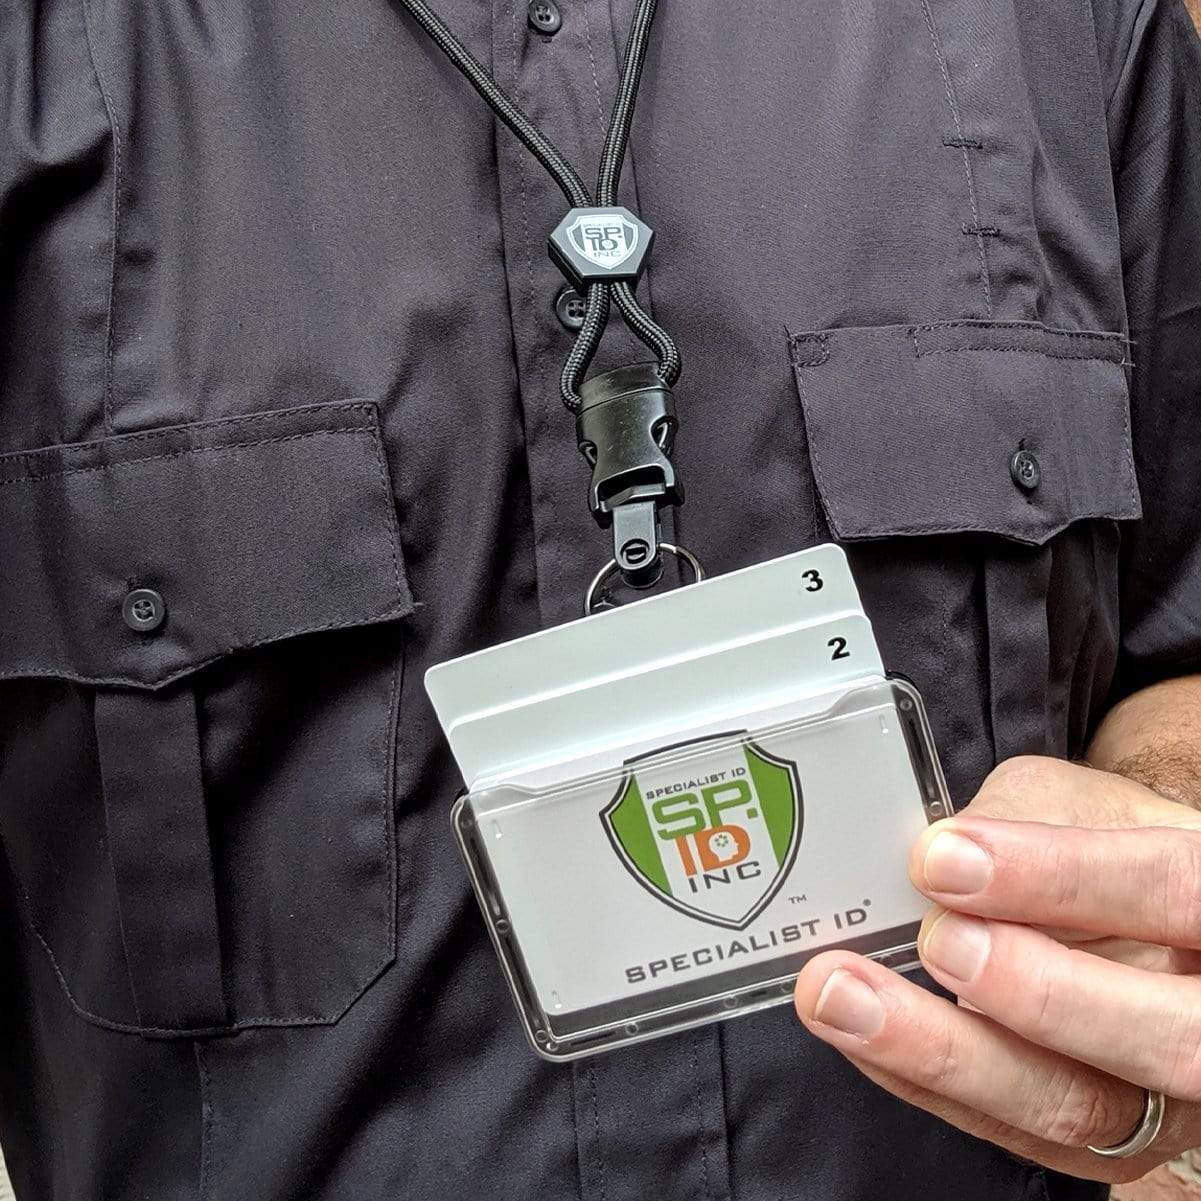 Specialist ID Breakaway Lanyard Badge Reel and Breakaway Lanyard Combo